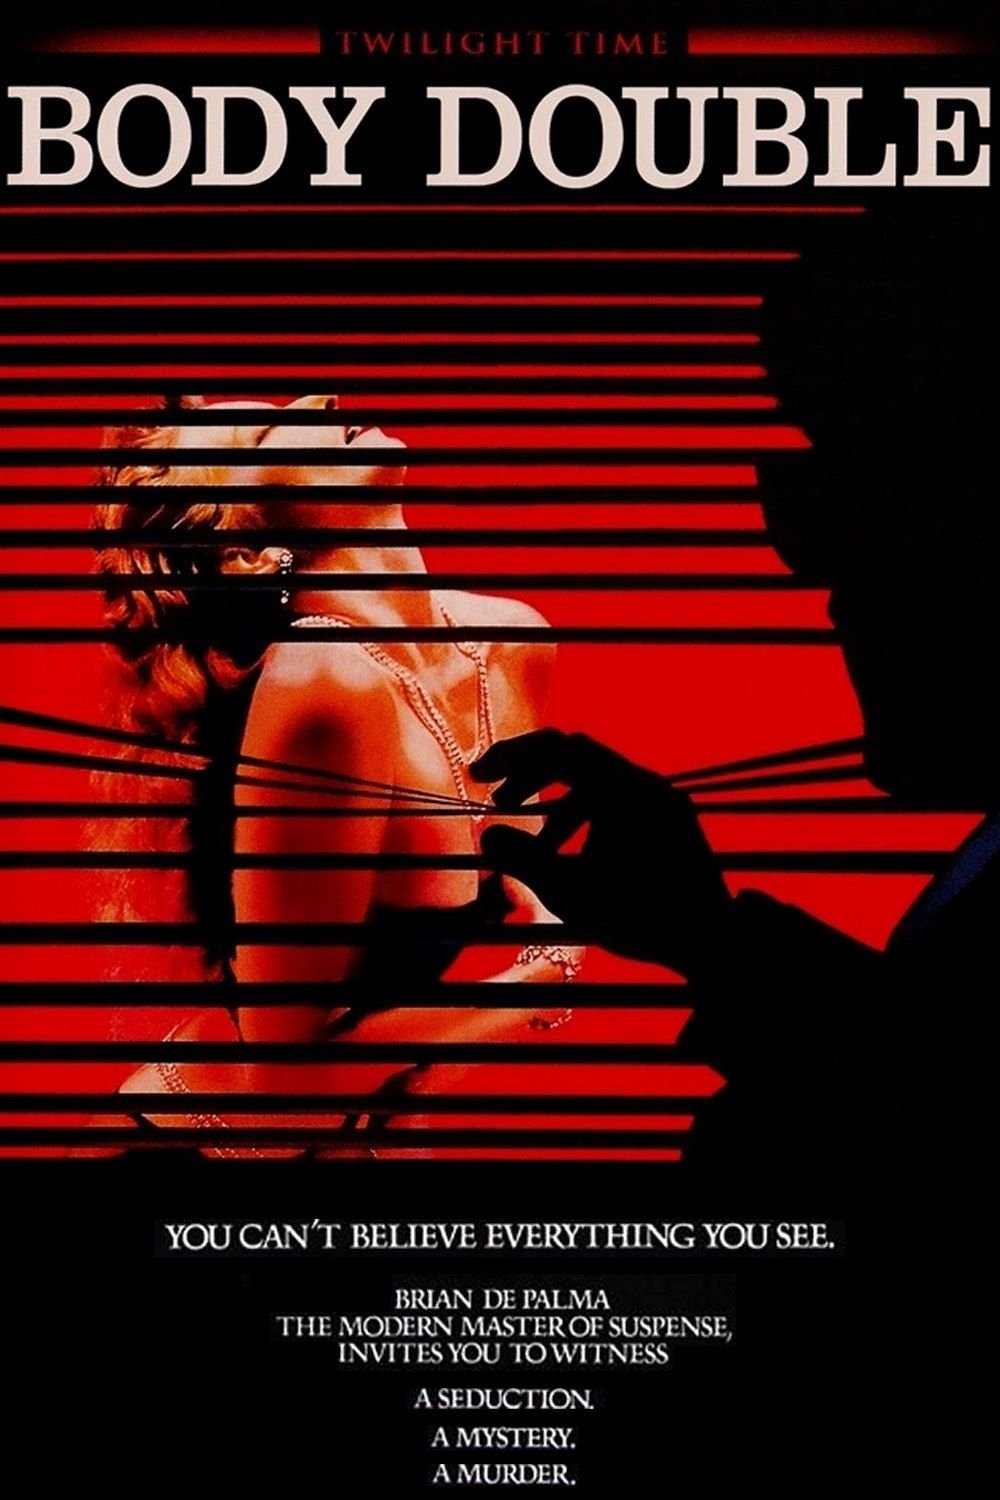 Body Double (1984) by Brian De Palma